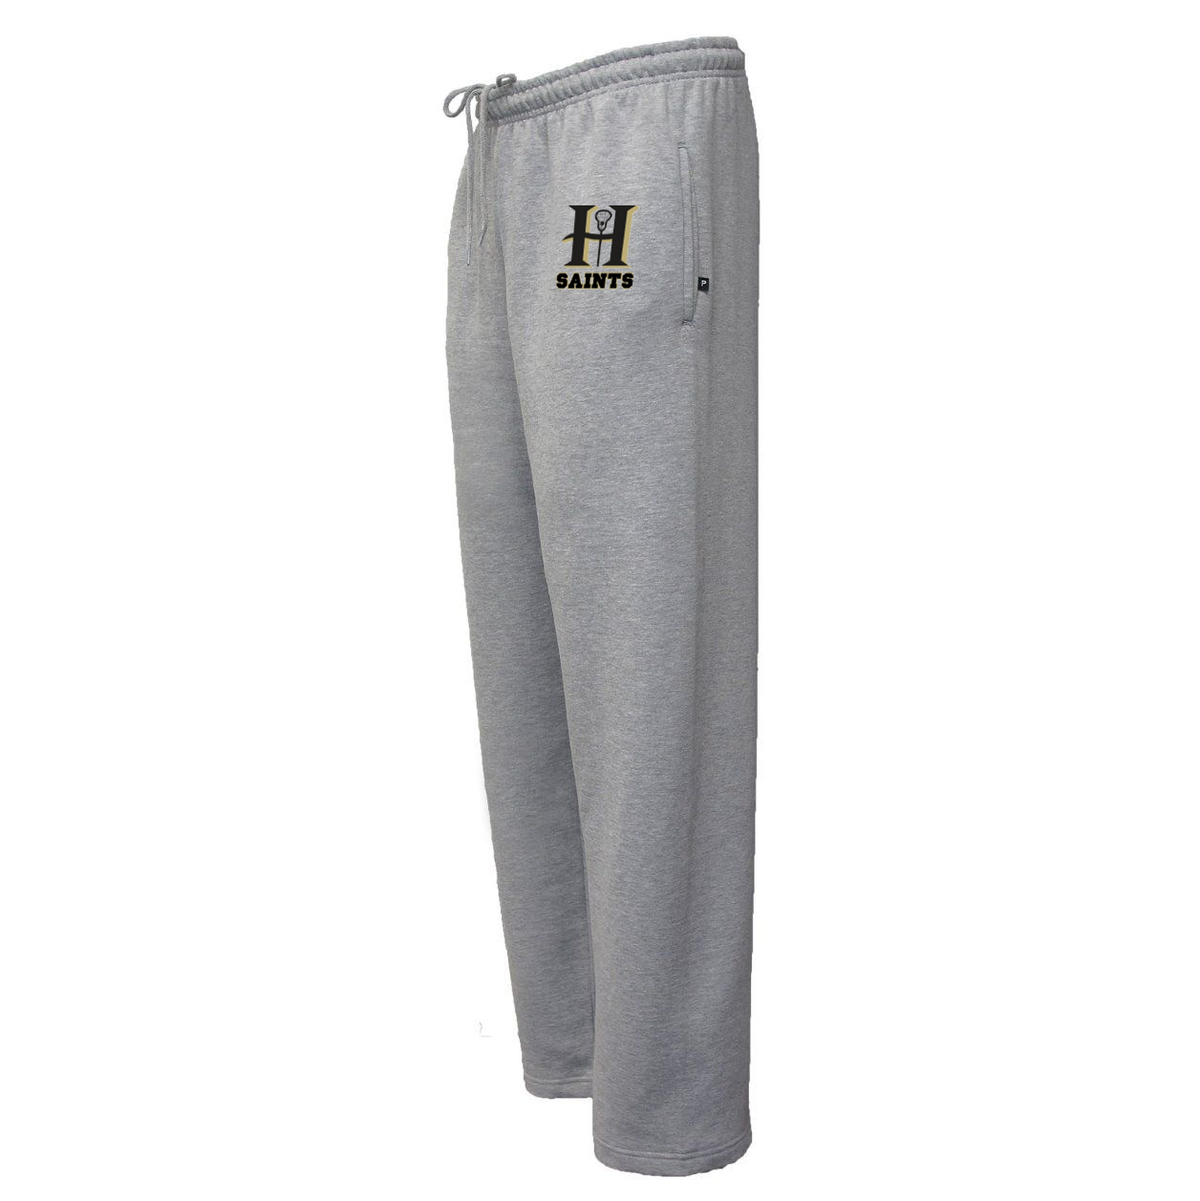 HAYLA Saints Grey Sweatpants